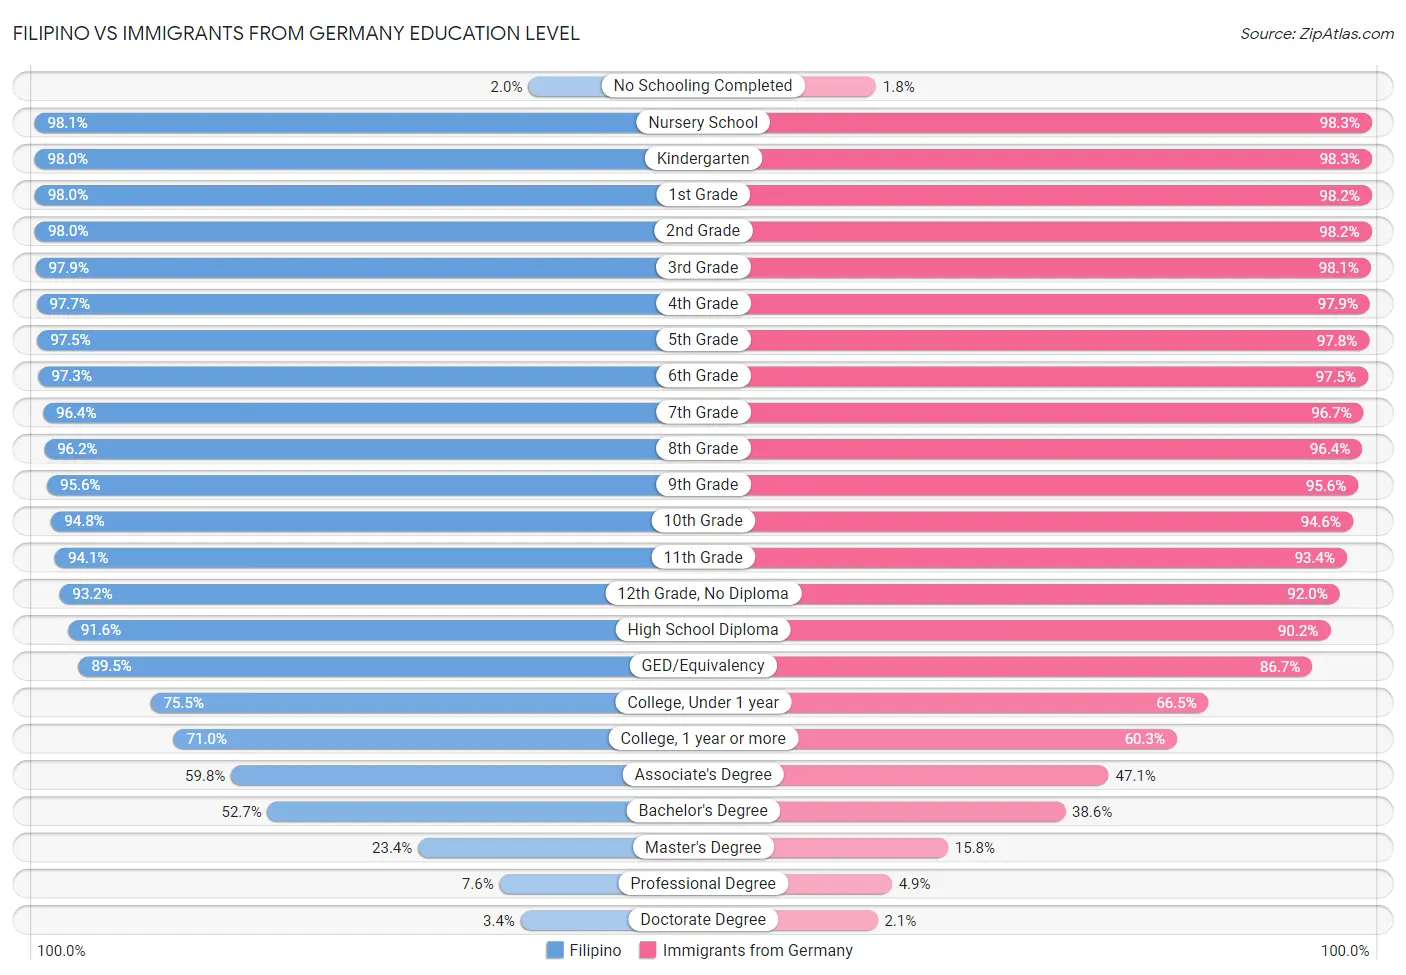 Filipino vs Immigrants from Germany Education Level